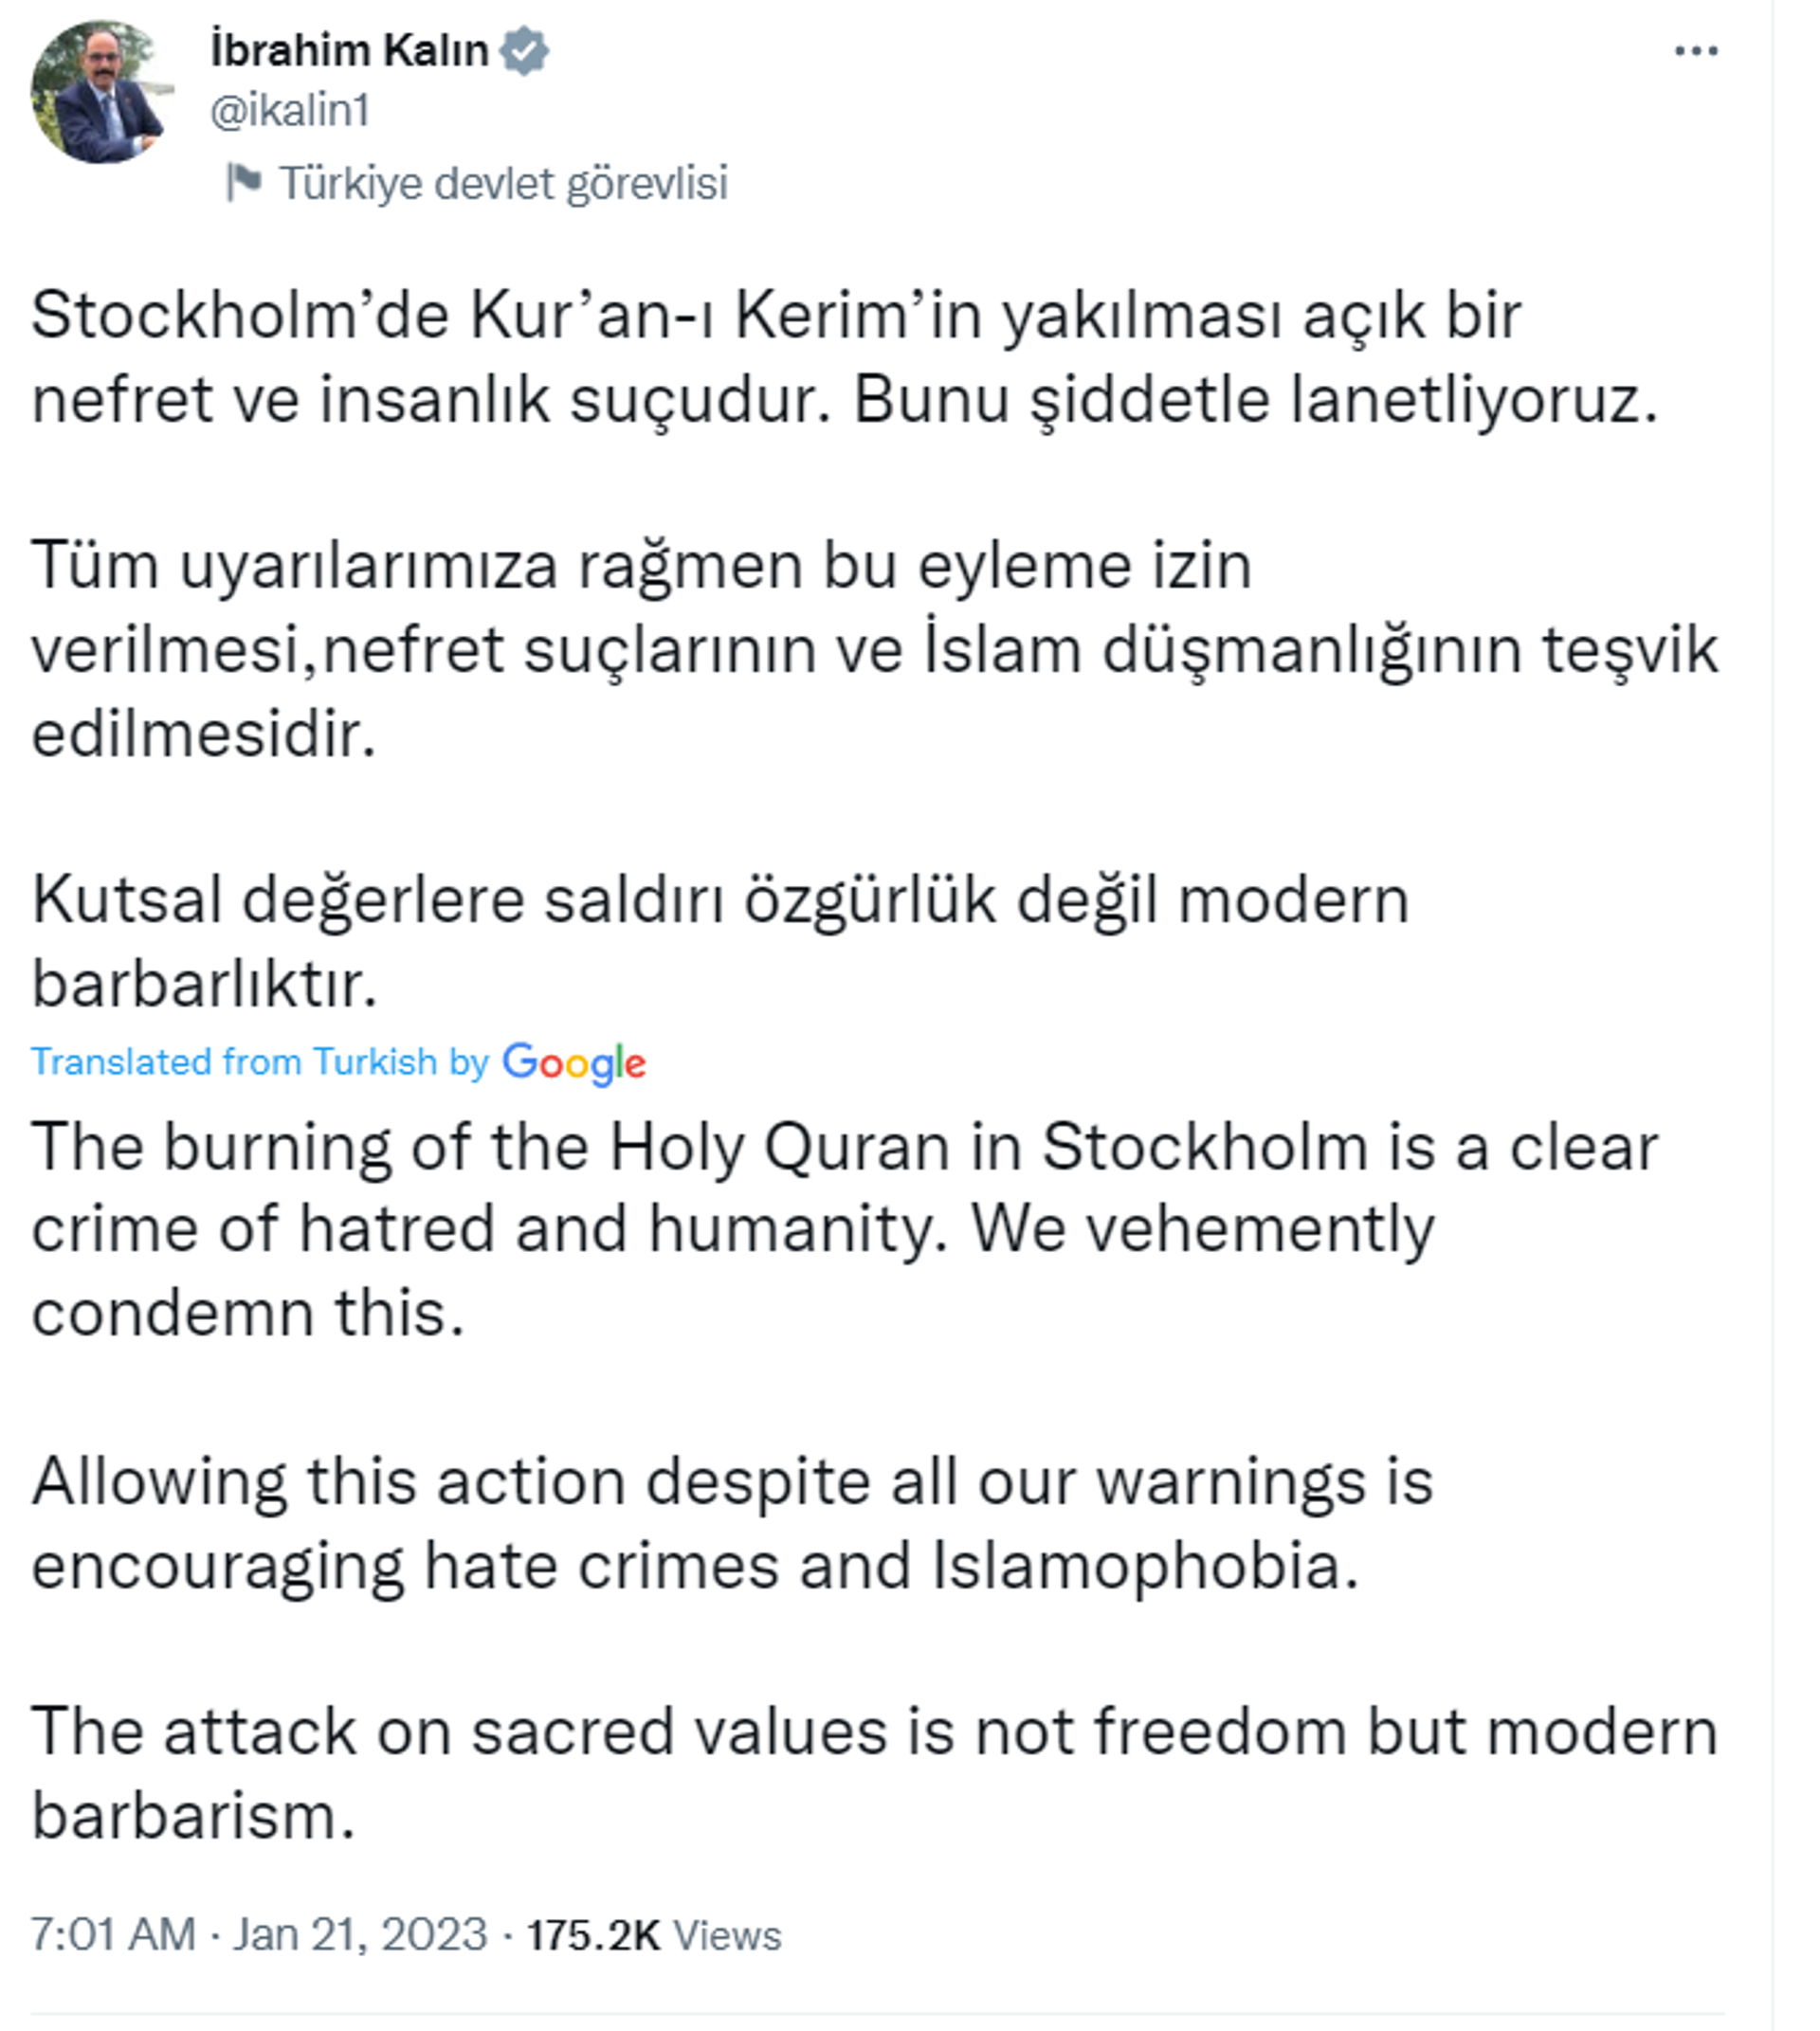 Screenshot of Twitter account of Ibrahim Kalın, Turkish President Recep Tayyip Erdogan’s spokesperson. - Sputnik International, 1920, 21.01.2023